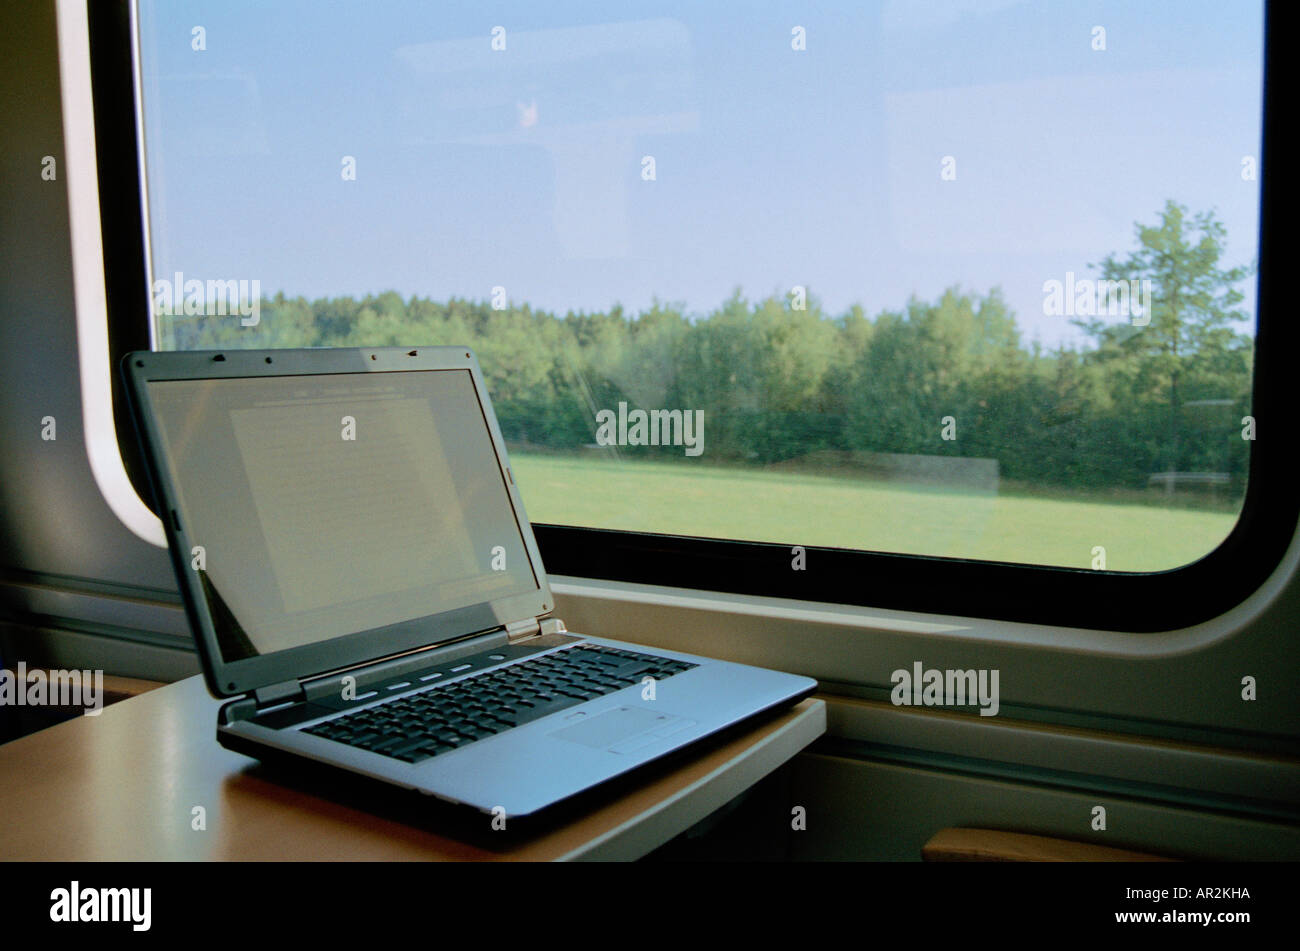 Laptop on table in passenger train Stock Photo